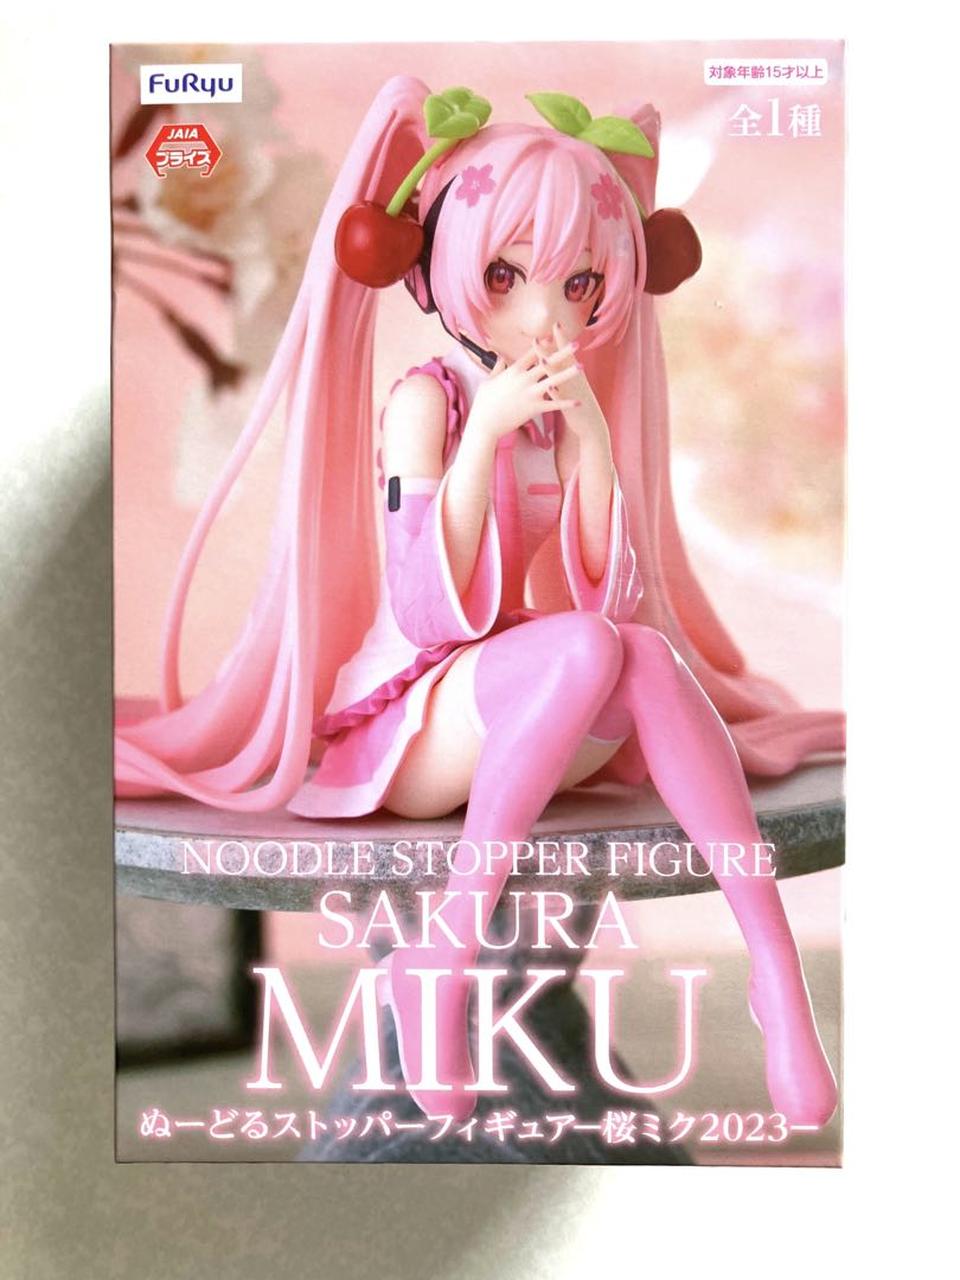 FuRyu Noodle Stopper Figure Sakura Miku 2023 Buy